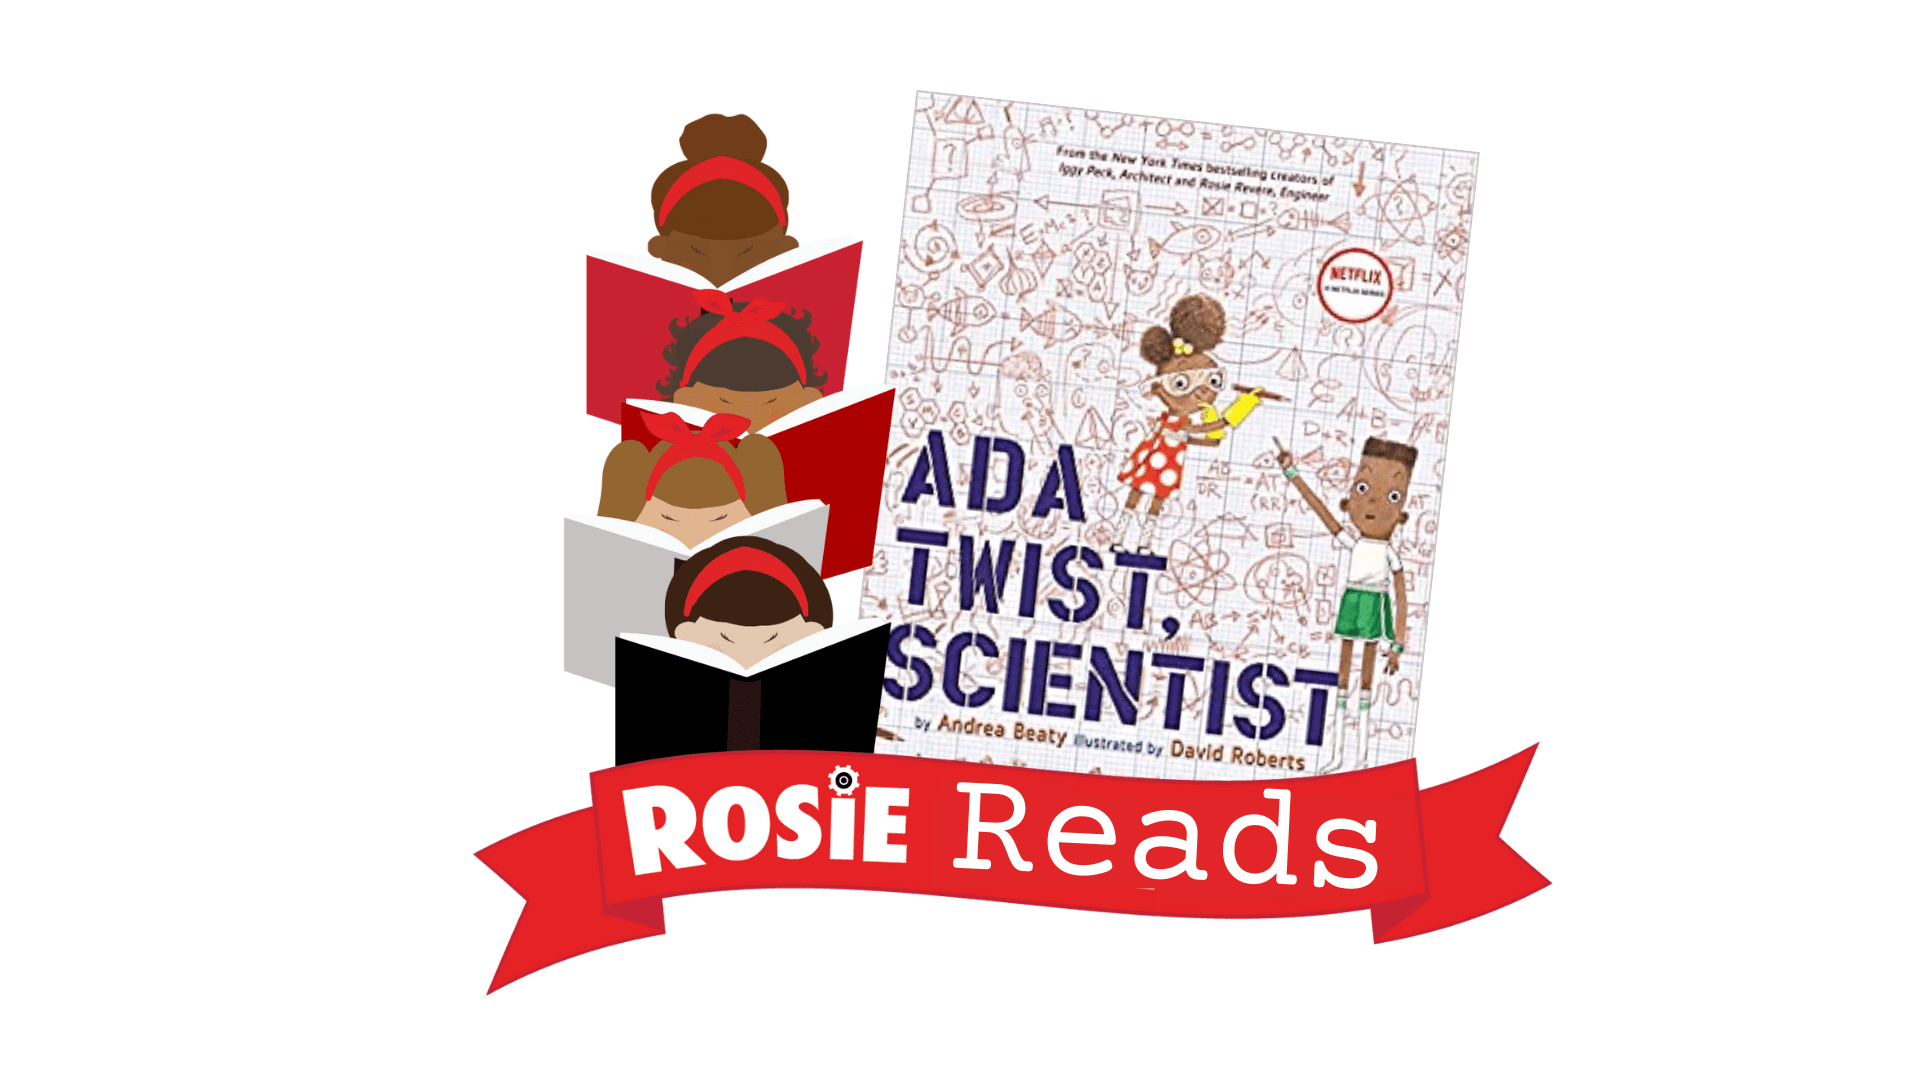 Ada Twist Scientist book cover and Rosie Reads Banner